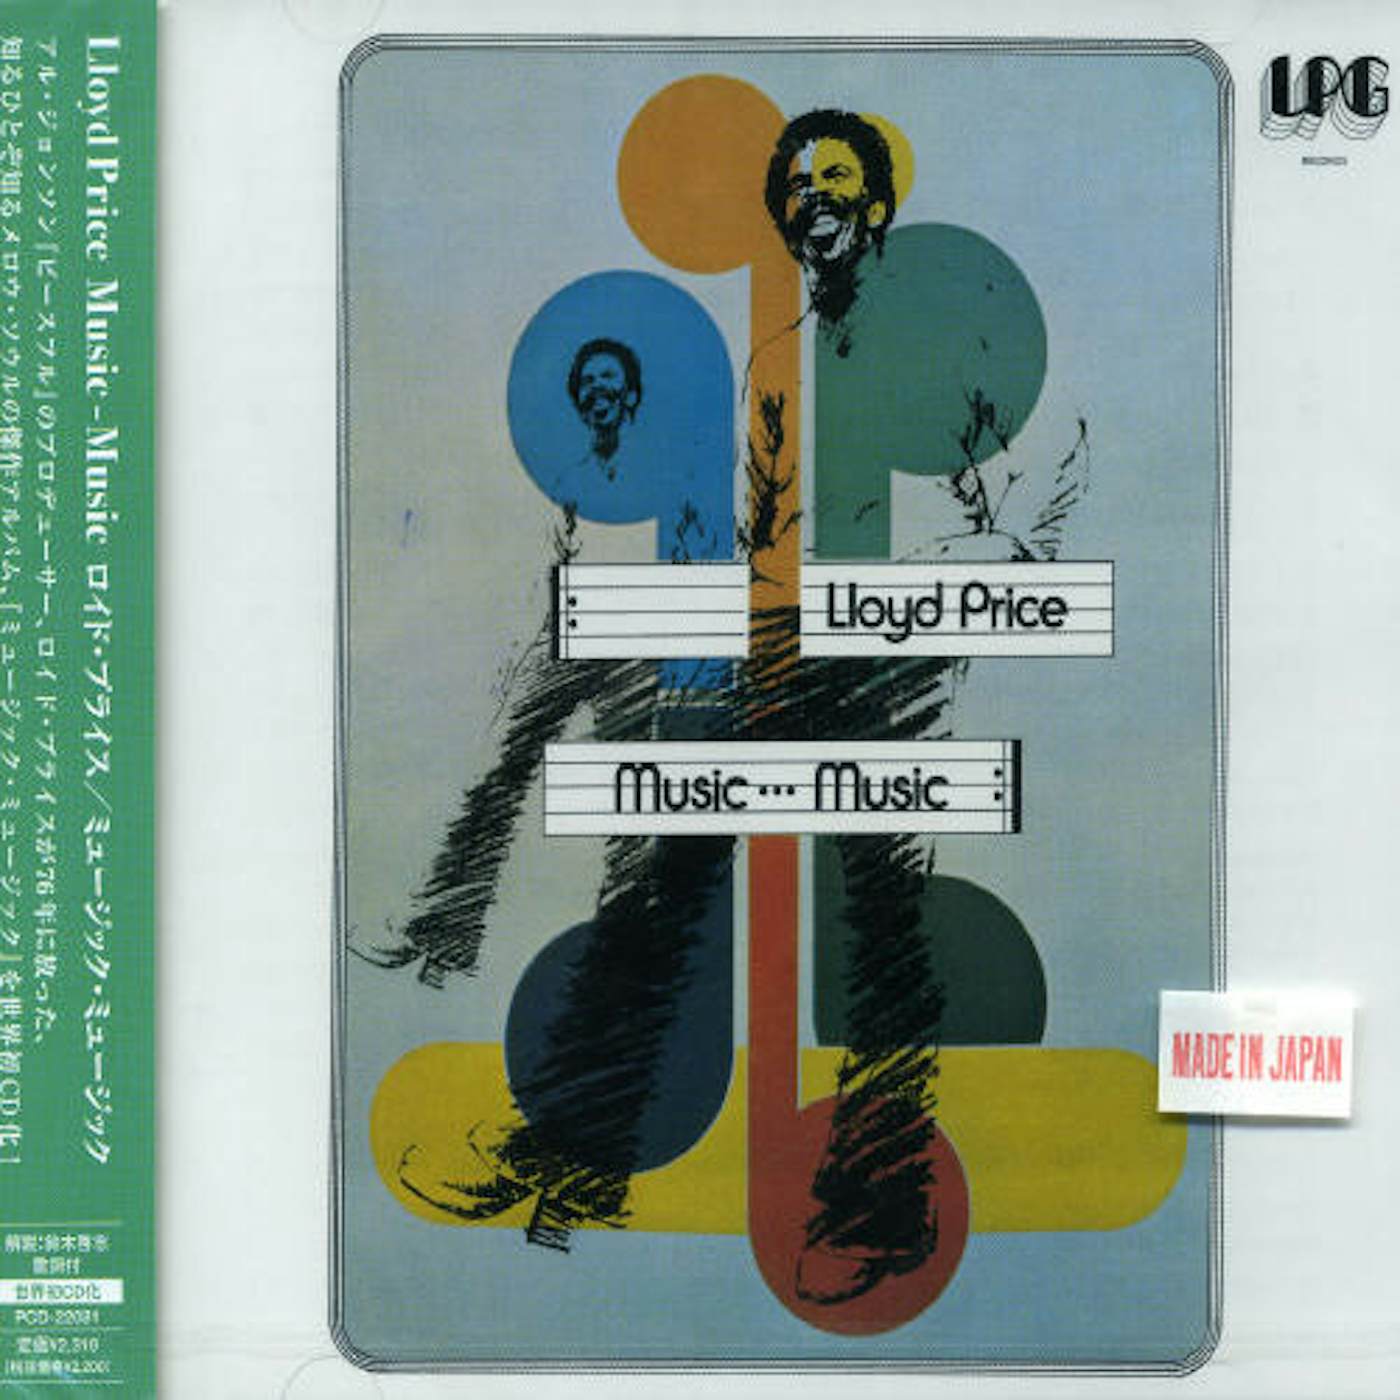 Lloyd Price MUSIC,MUSI CD